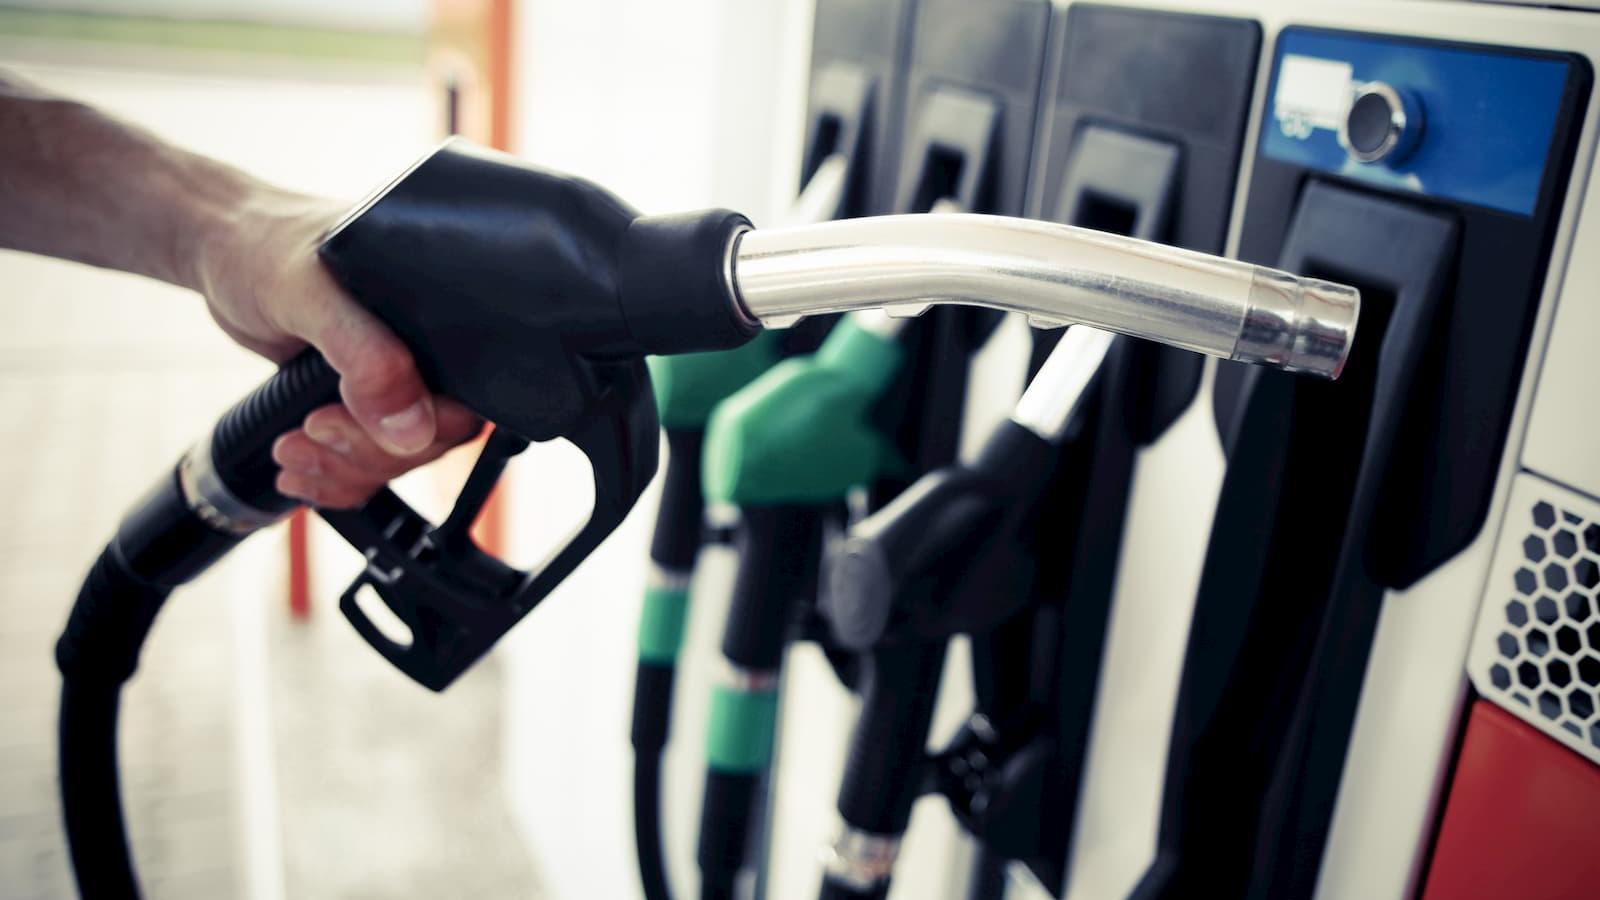 Qatar Petroleum announces fuel prices for January 2020